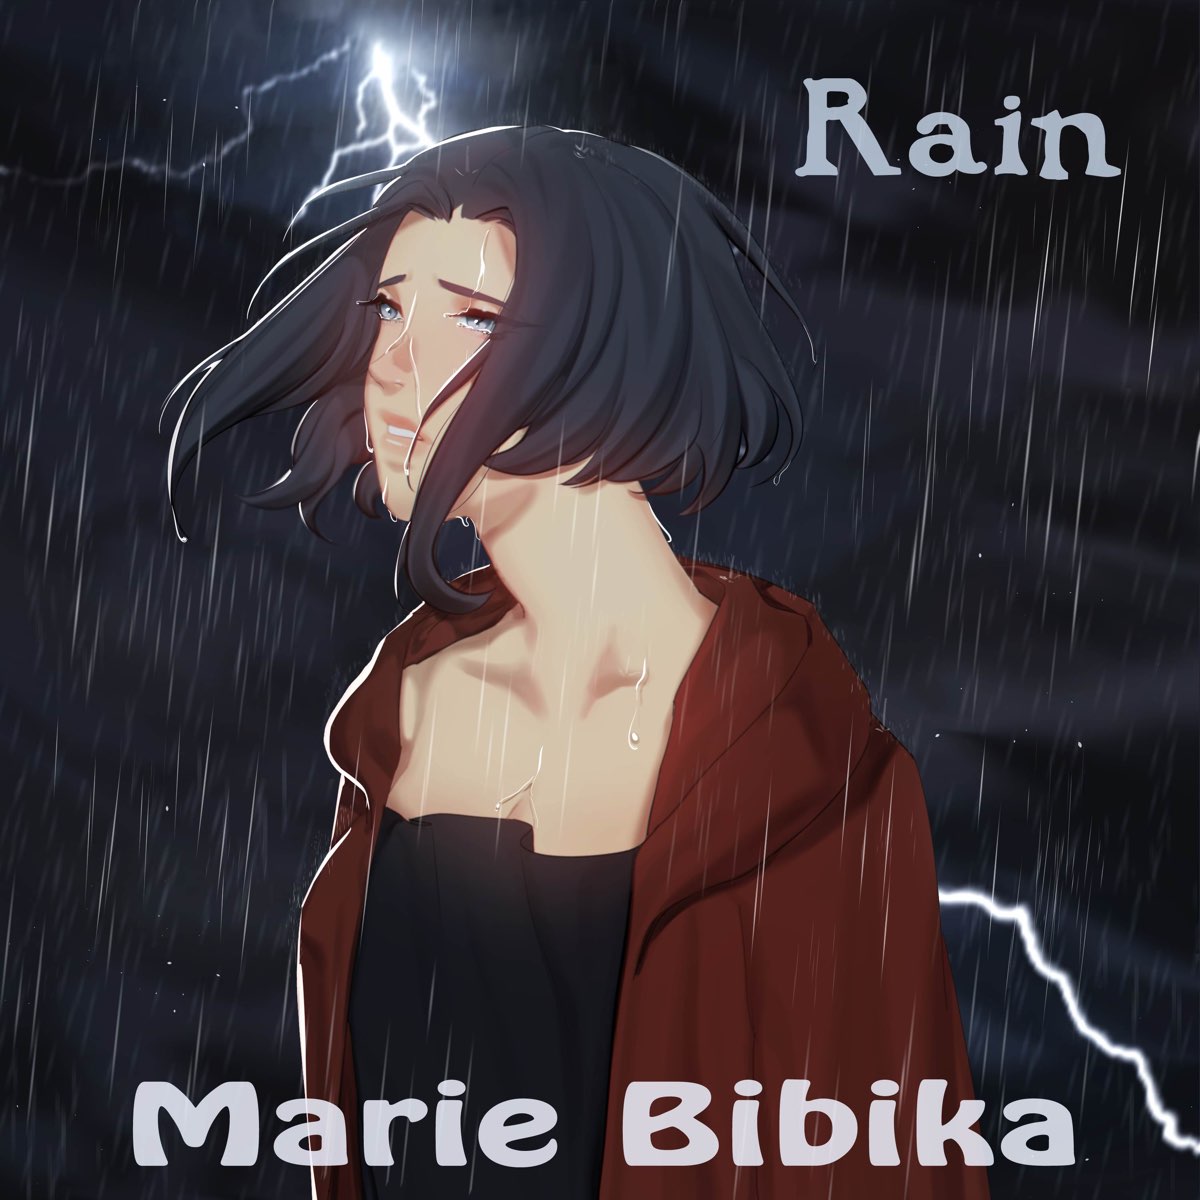 Стальной алхимик дождь. Стальной алхимик дождь начинается. The Sadness of Steel Rain Alchemist. Marie bibika